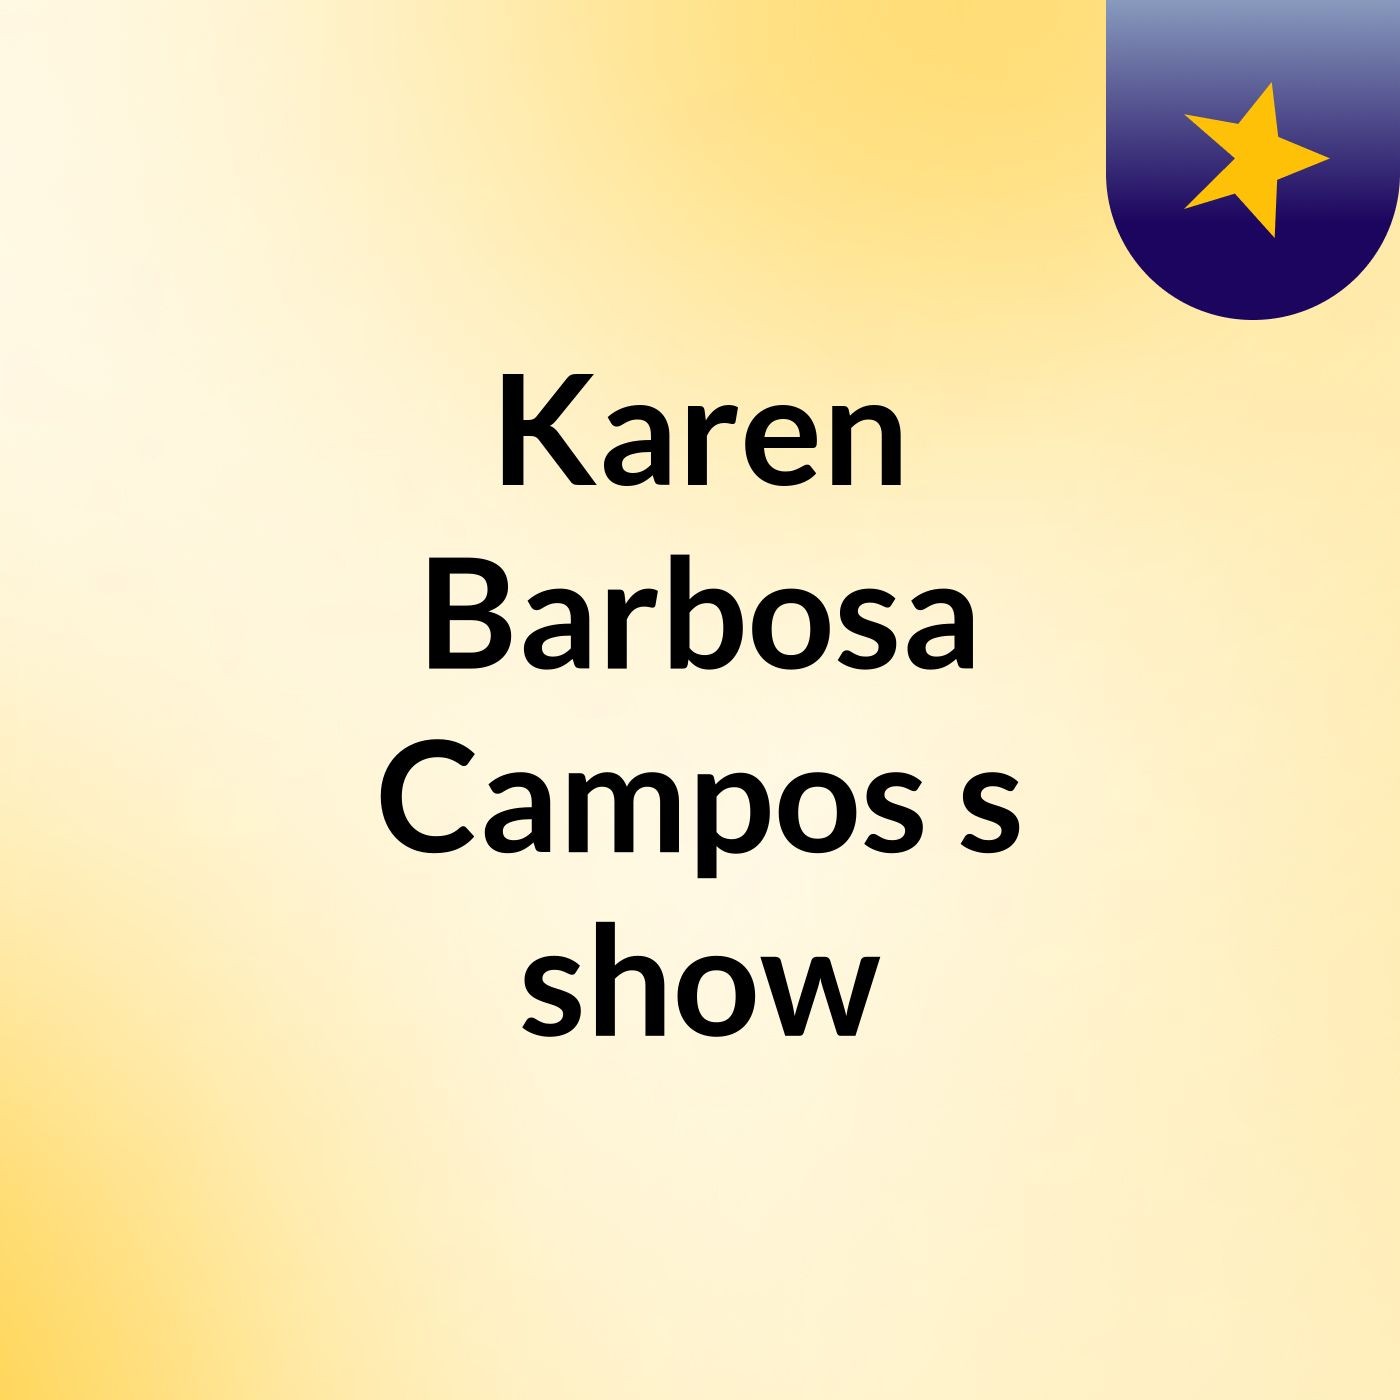 Karen Barbosa Campos's show